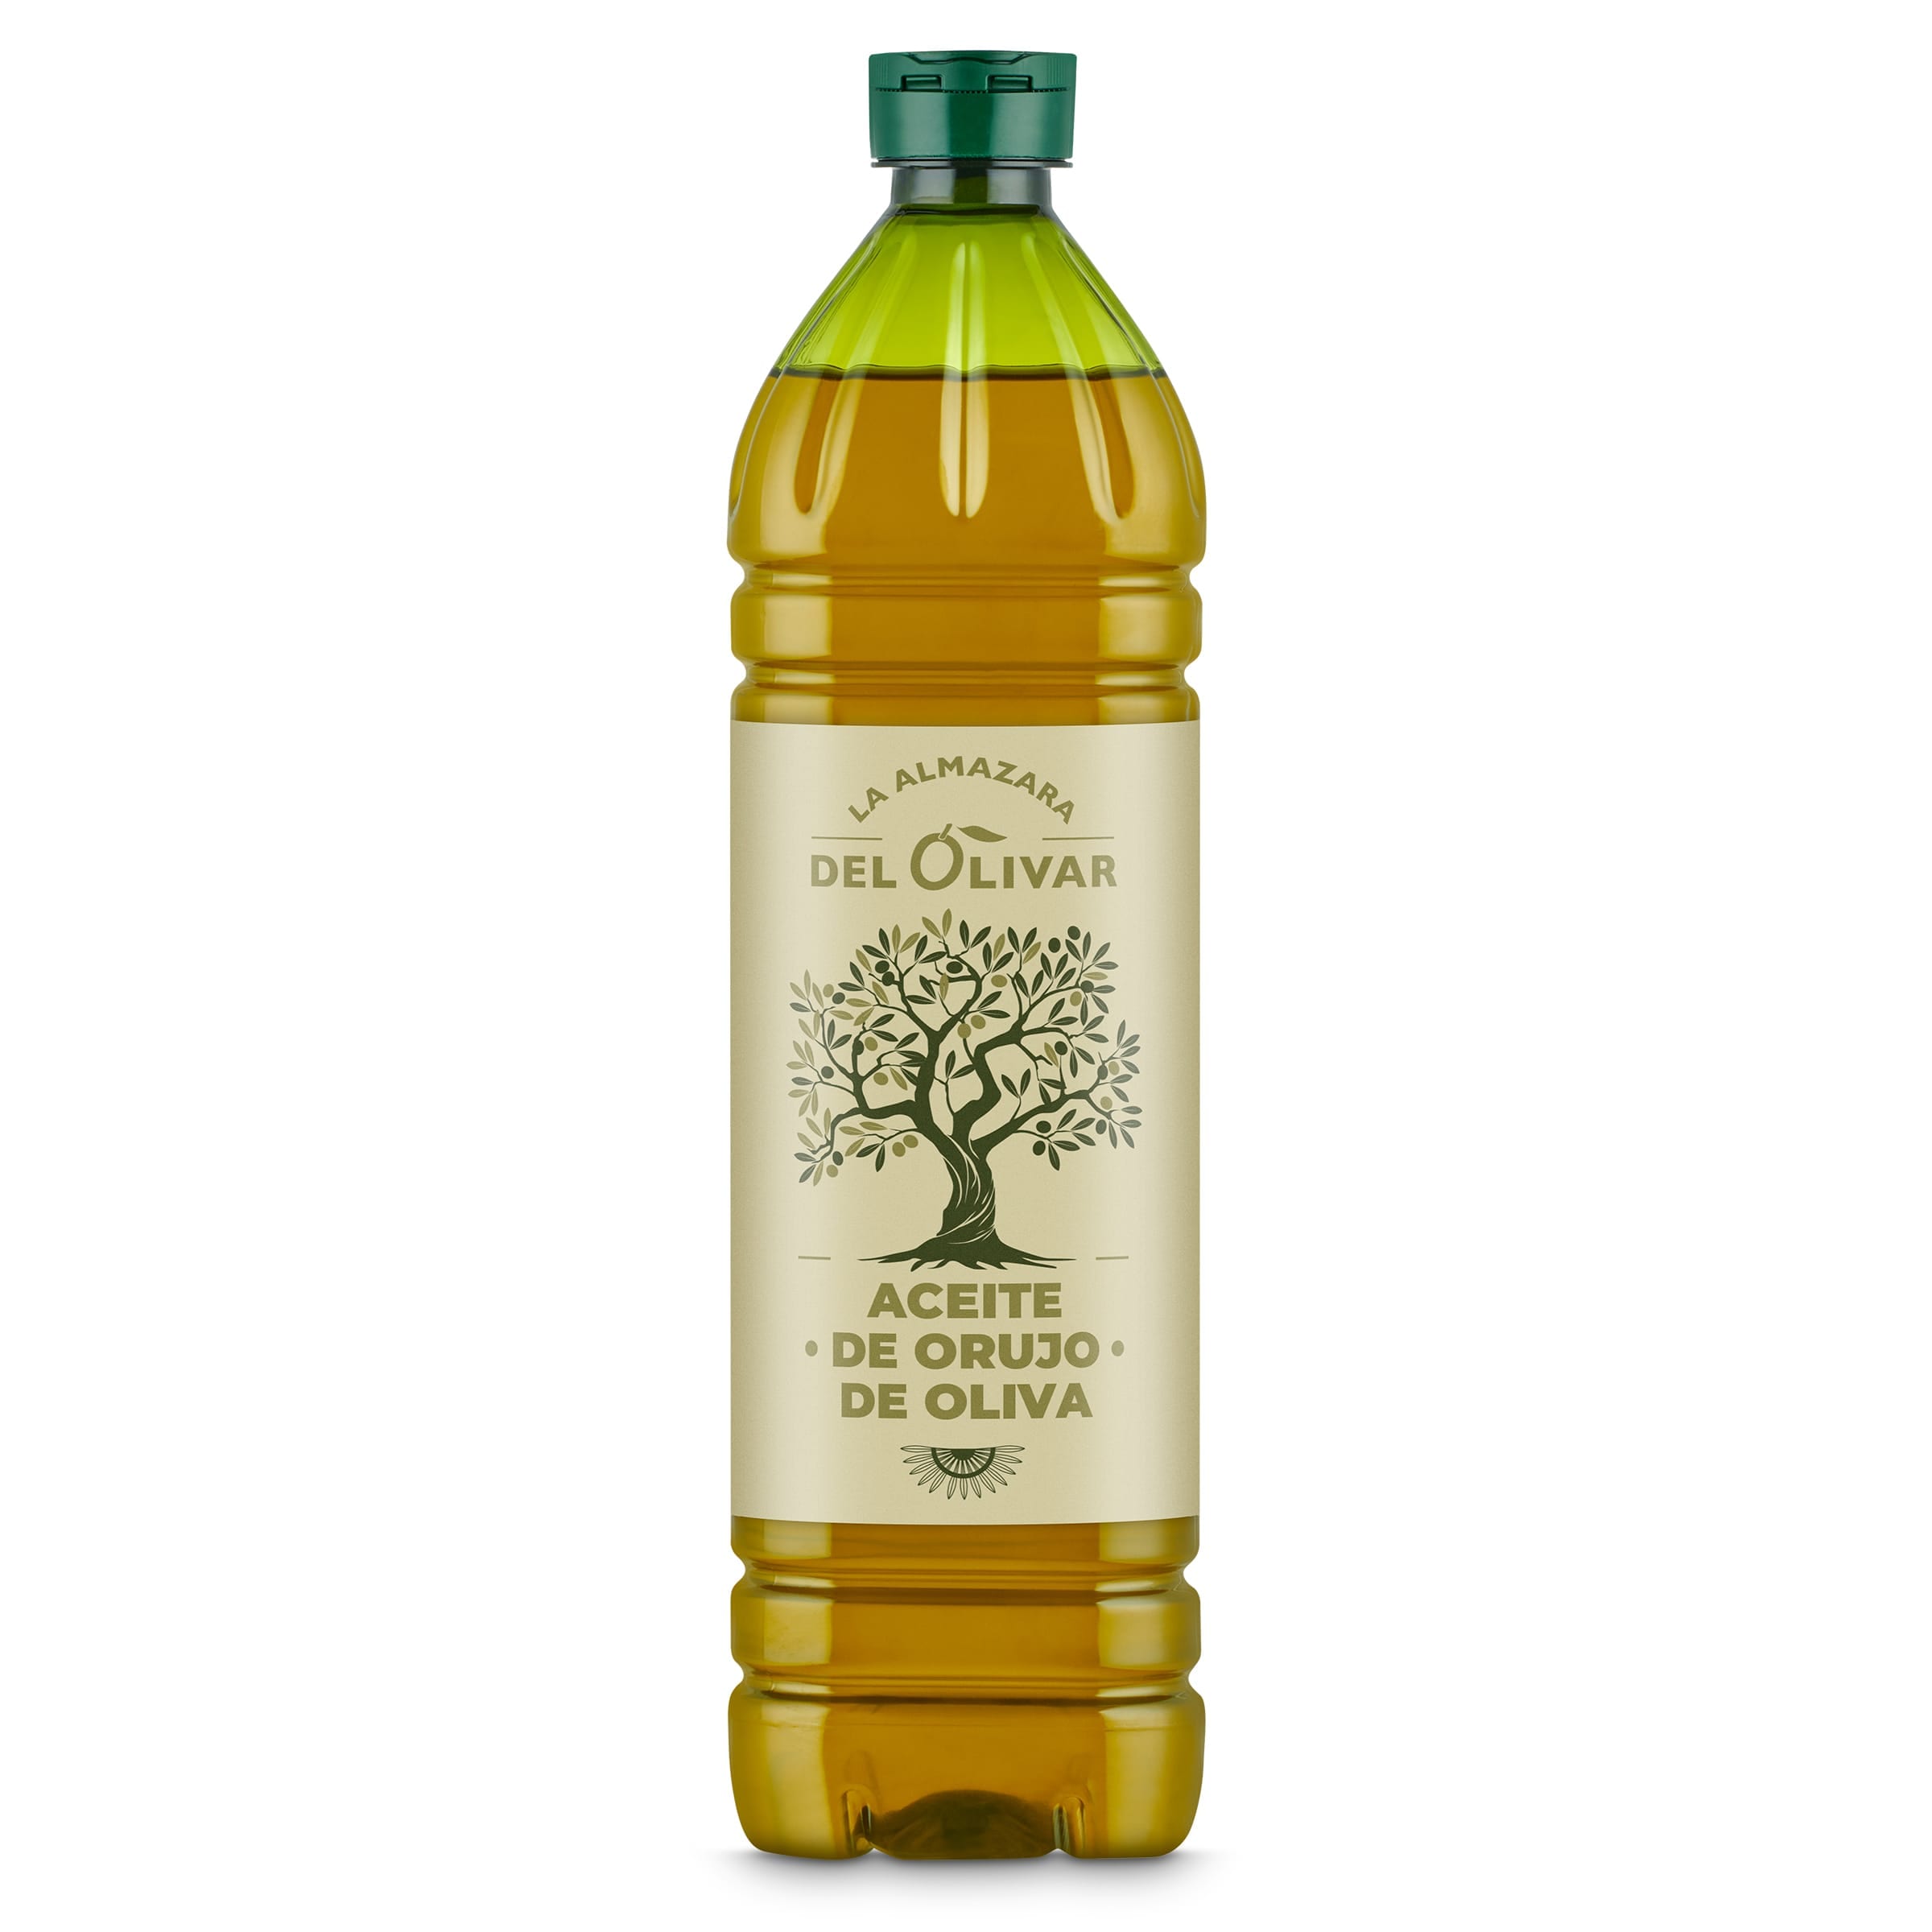 Aceite de orujo de oliva La Almazara del Olivar botella 1 l - Supermercados  DIA